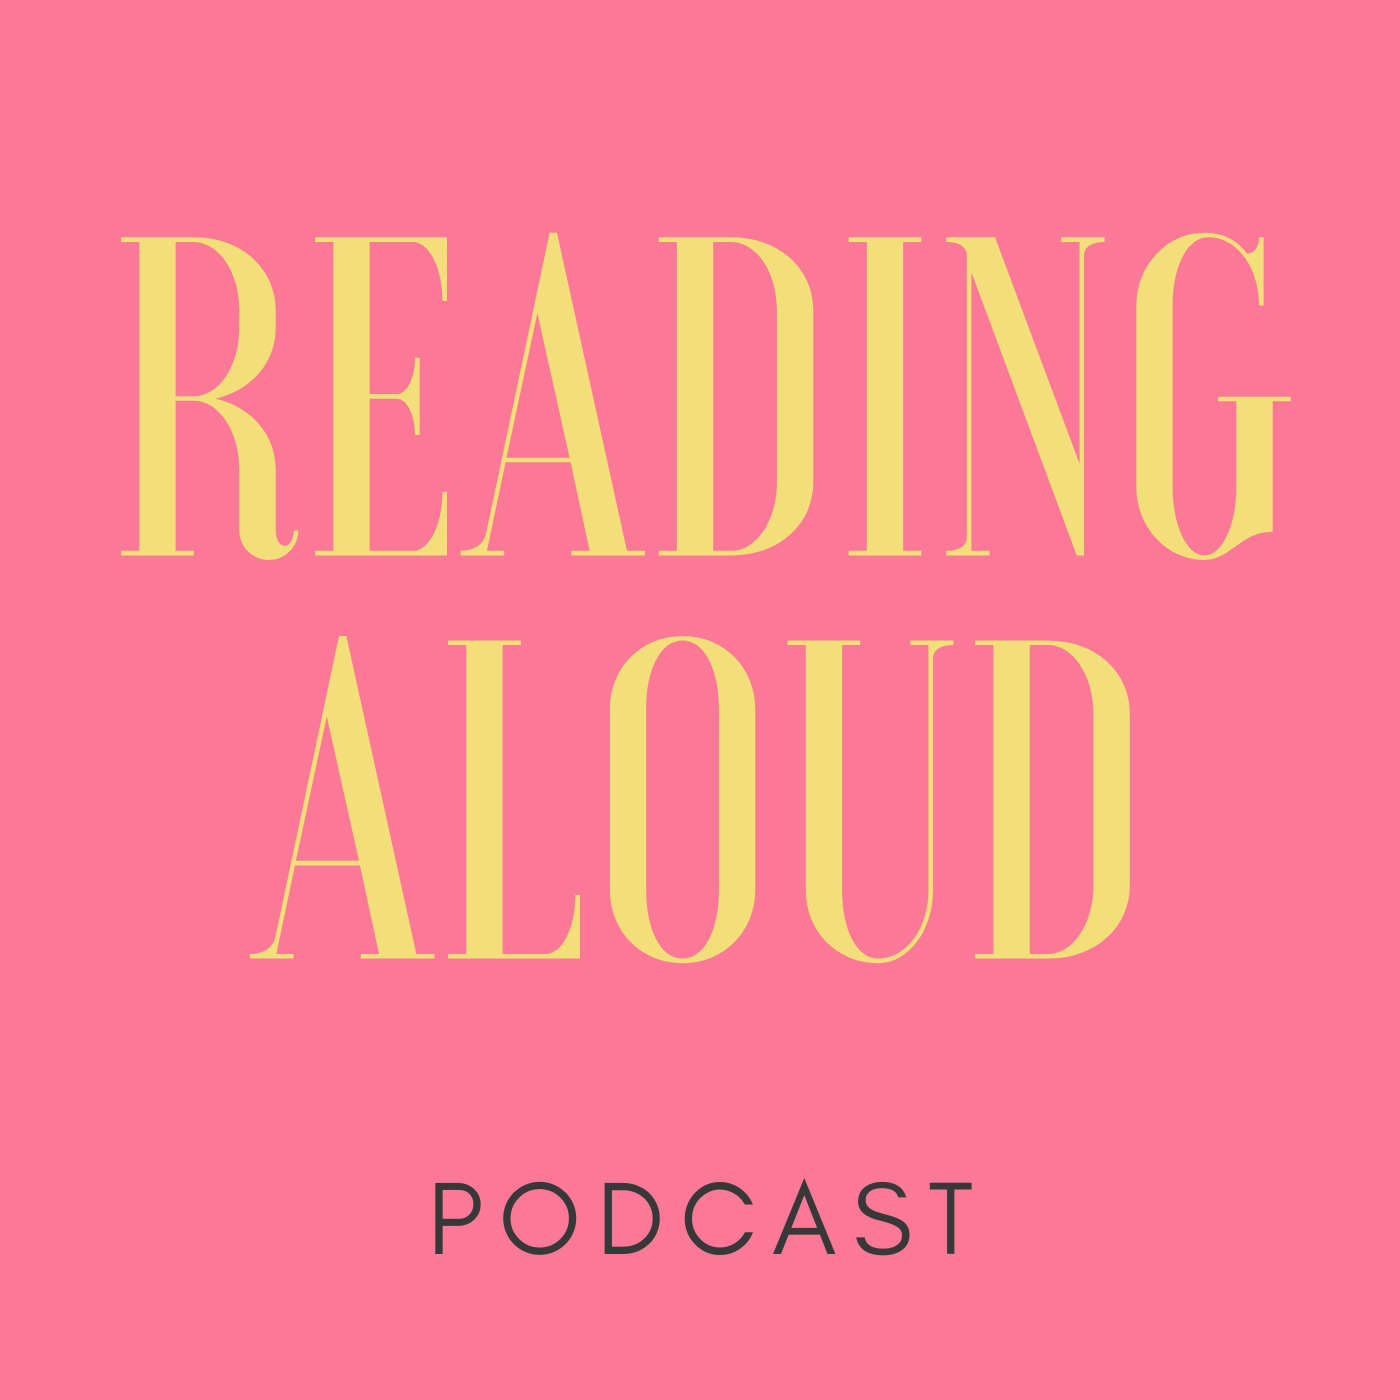 Artwork for podcast Reading Aloud